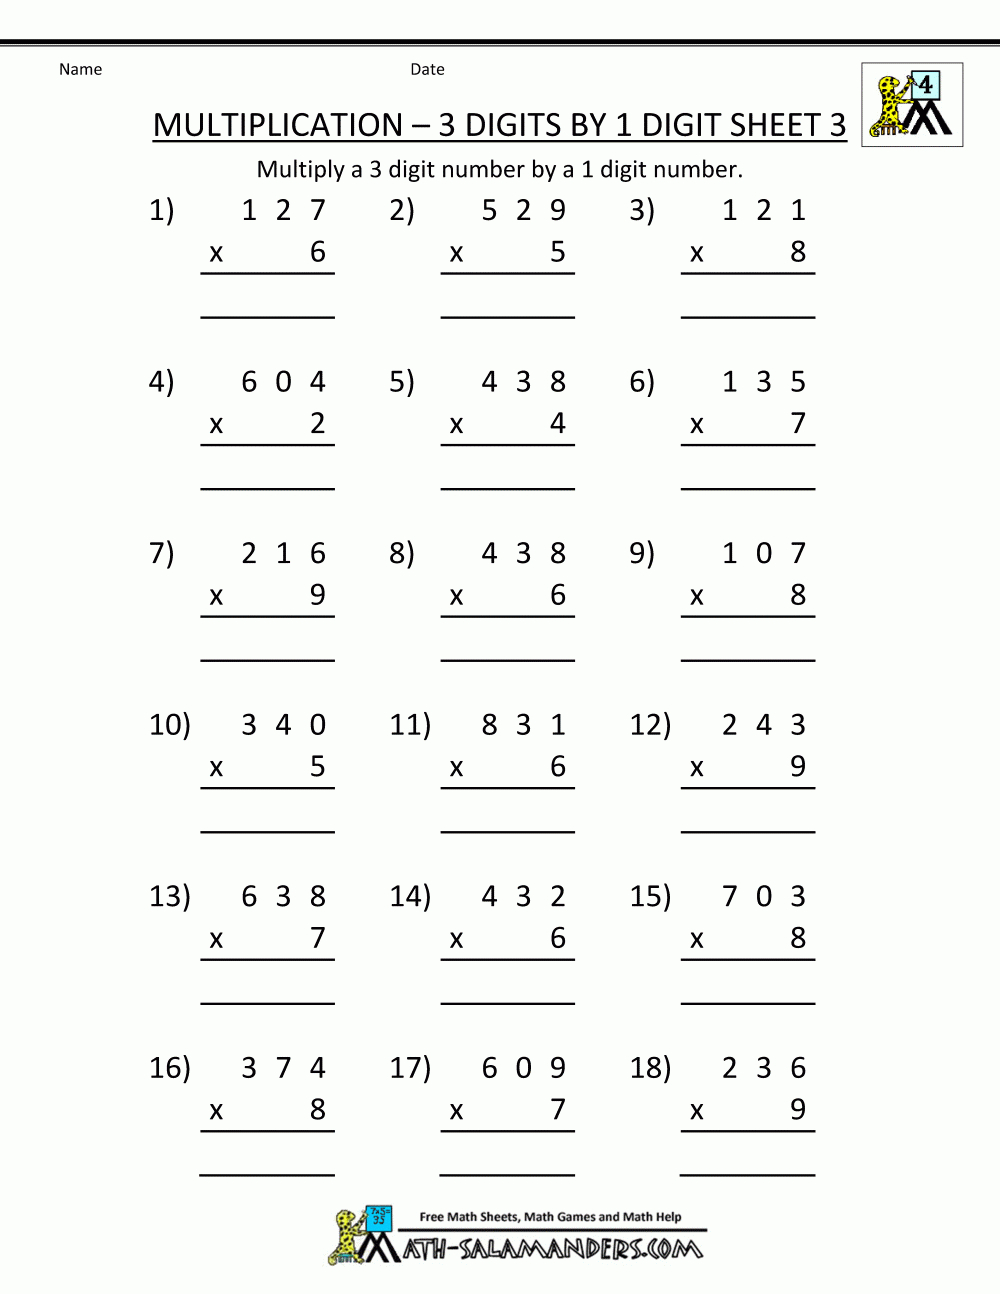 Free Math Sheets Multiplication 3 Digits1 Digit 3 | Math intended for Multiplication Worksheets Year 3